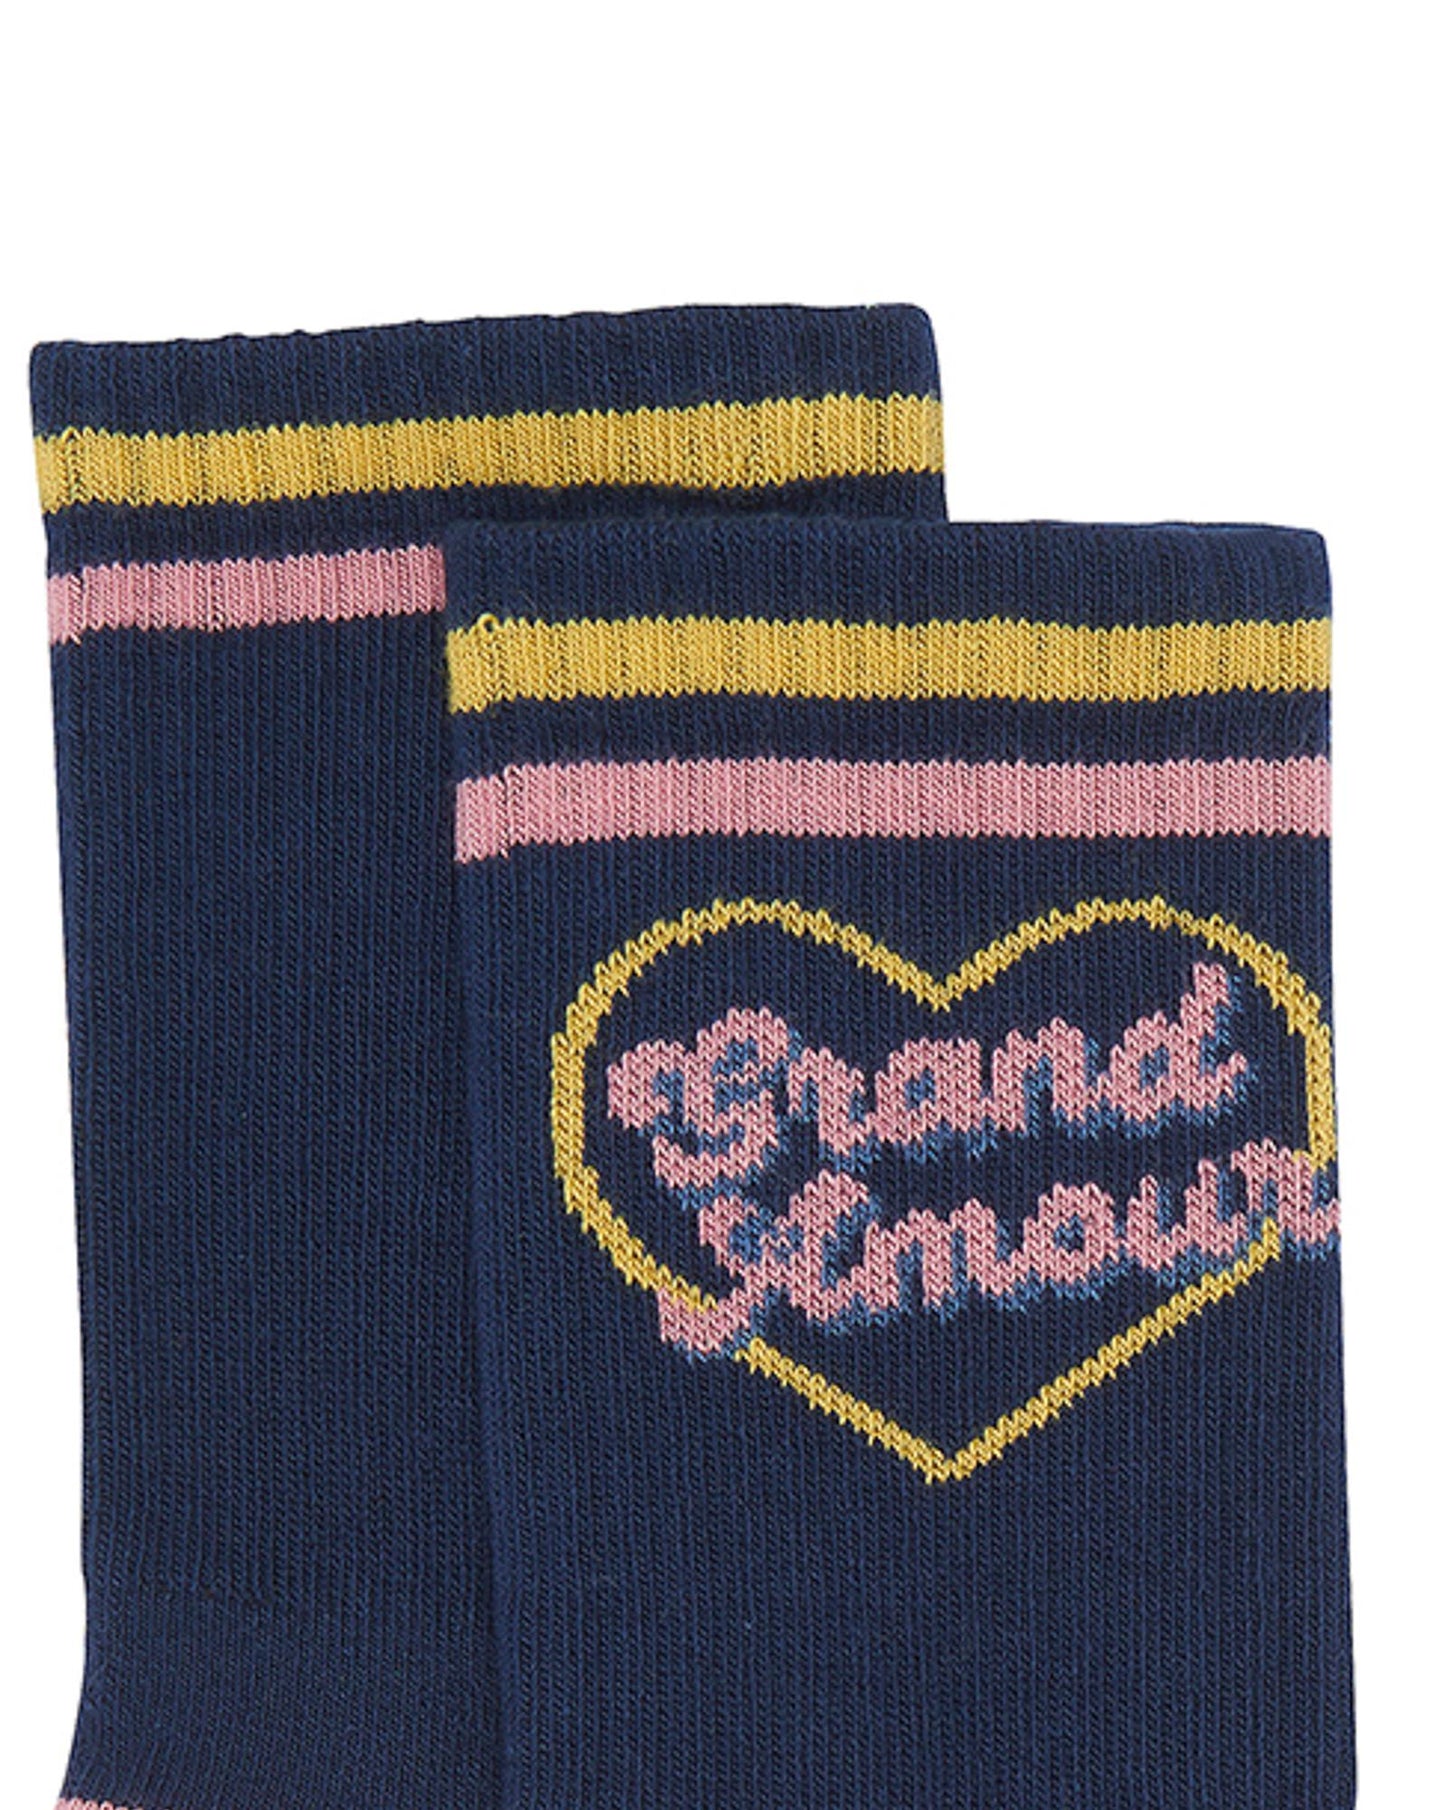 Grandamour duo sock Blue jacquard knitting